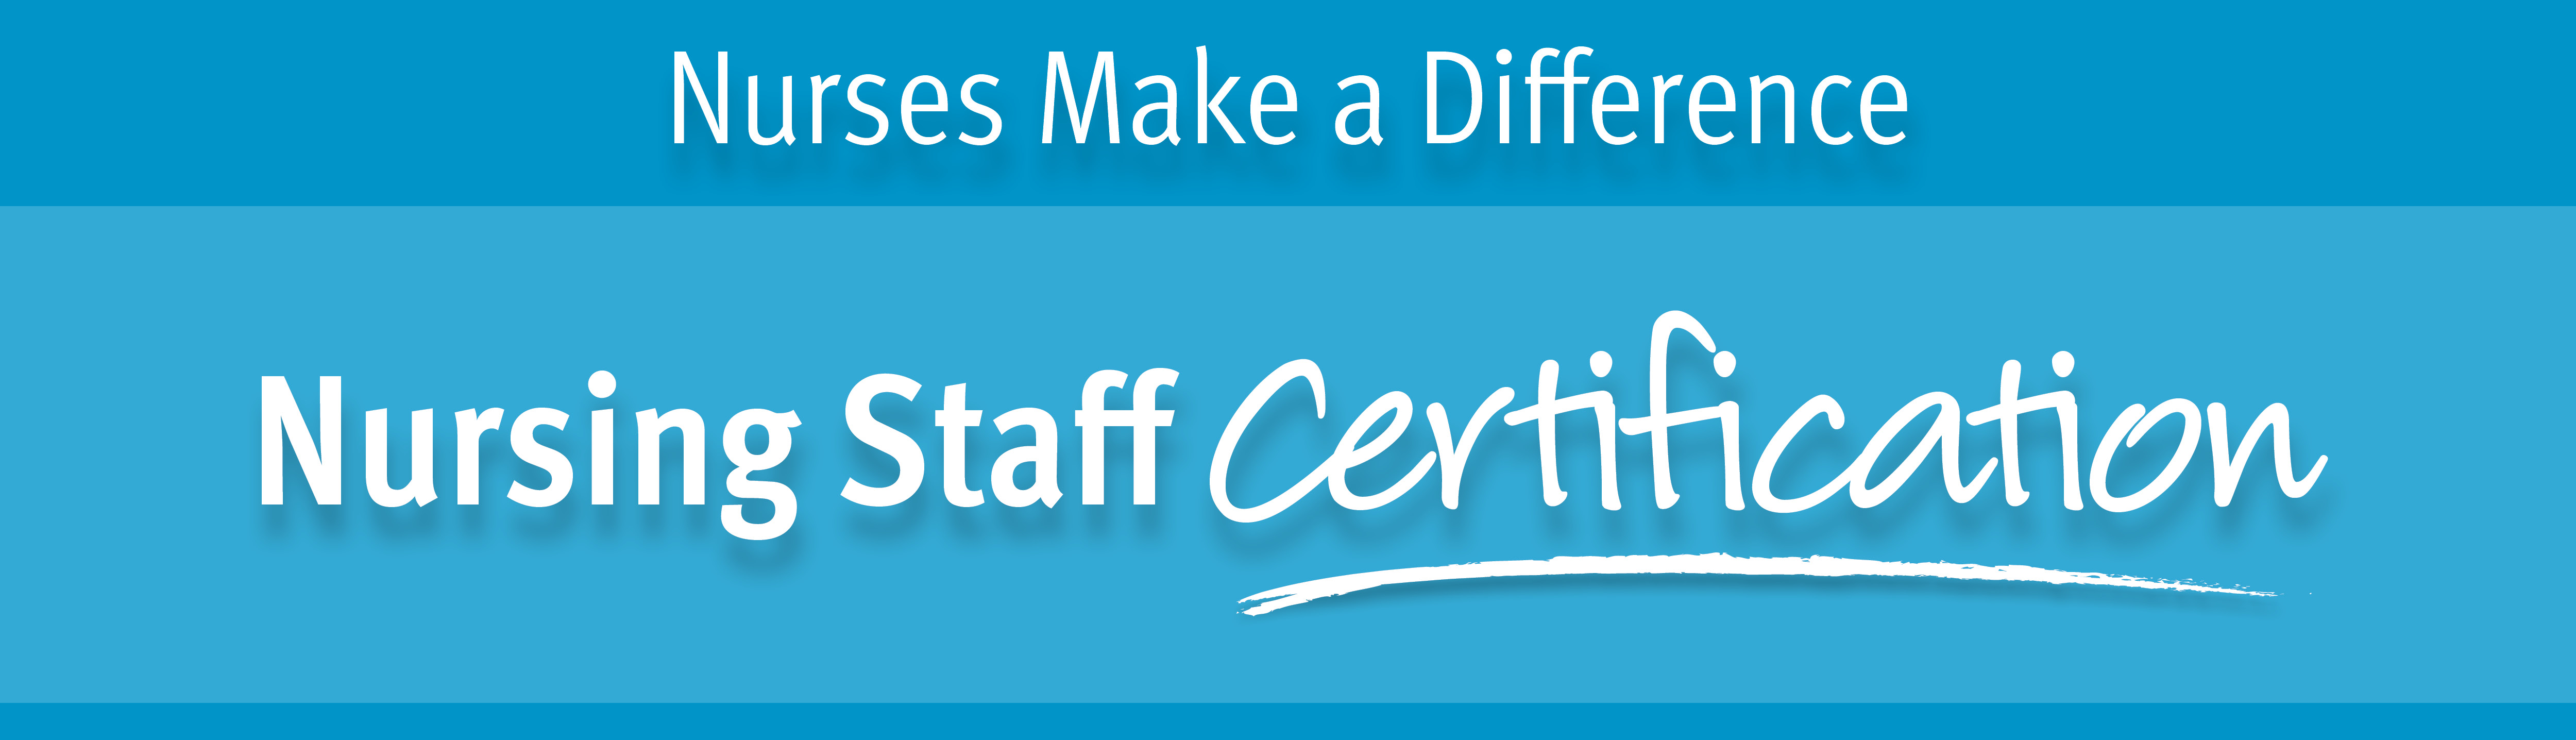 Nursing Staff Certification